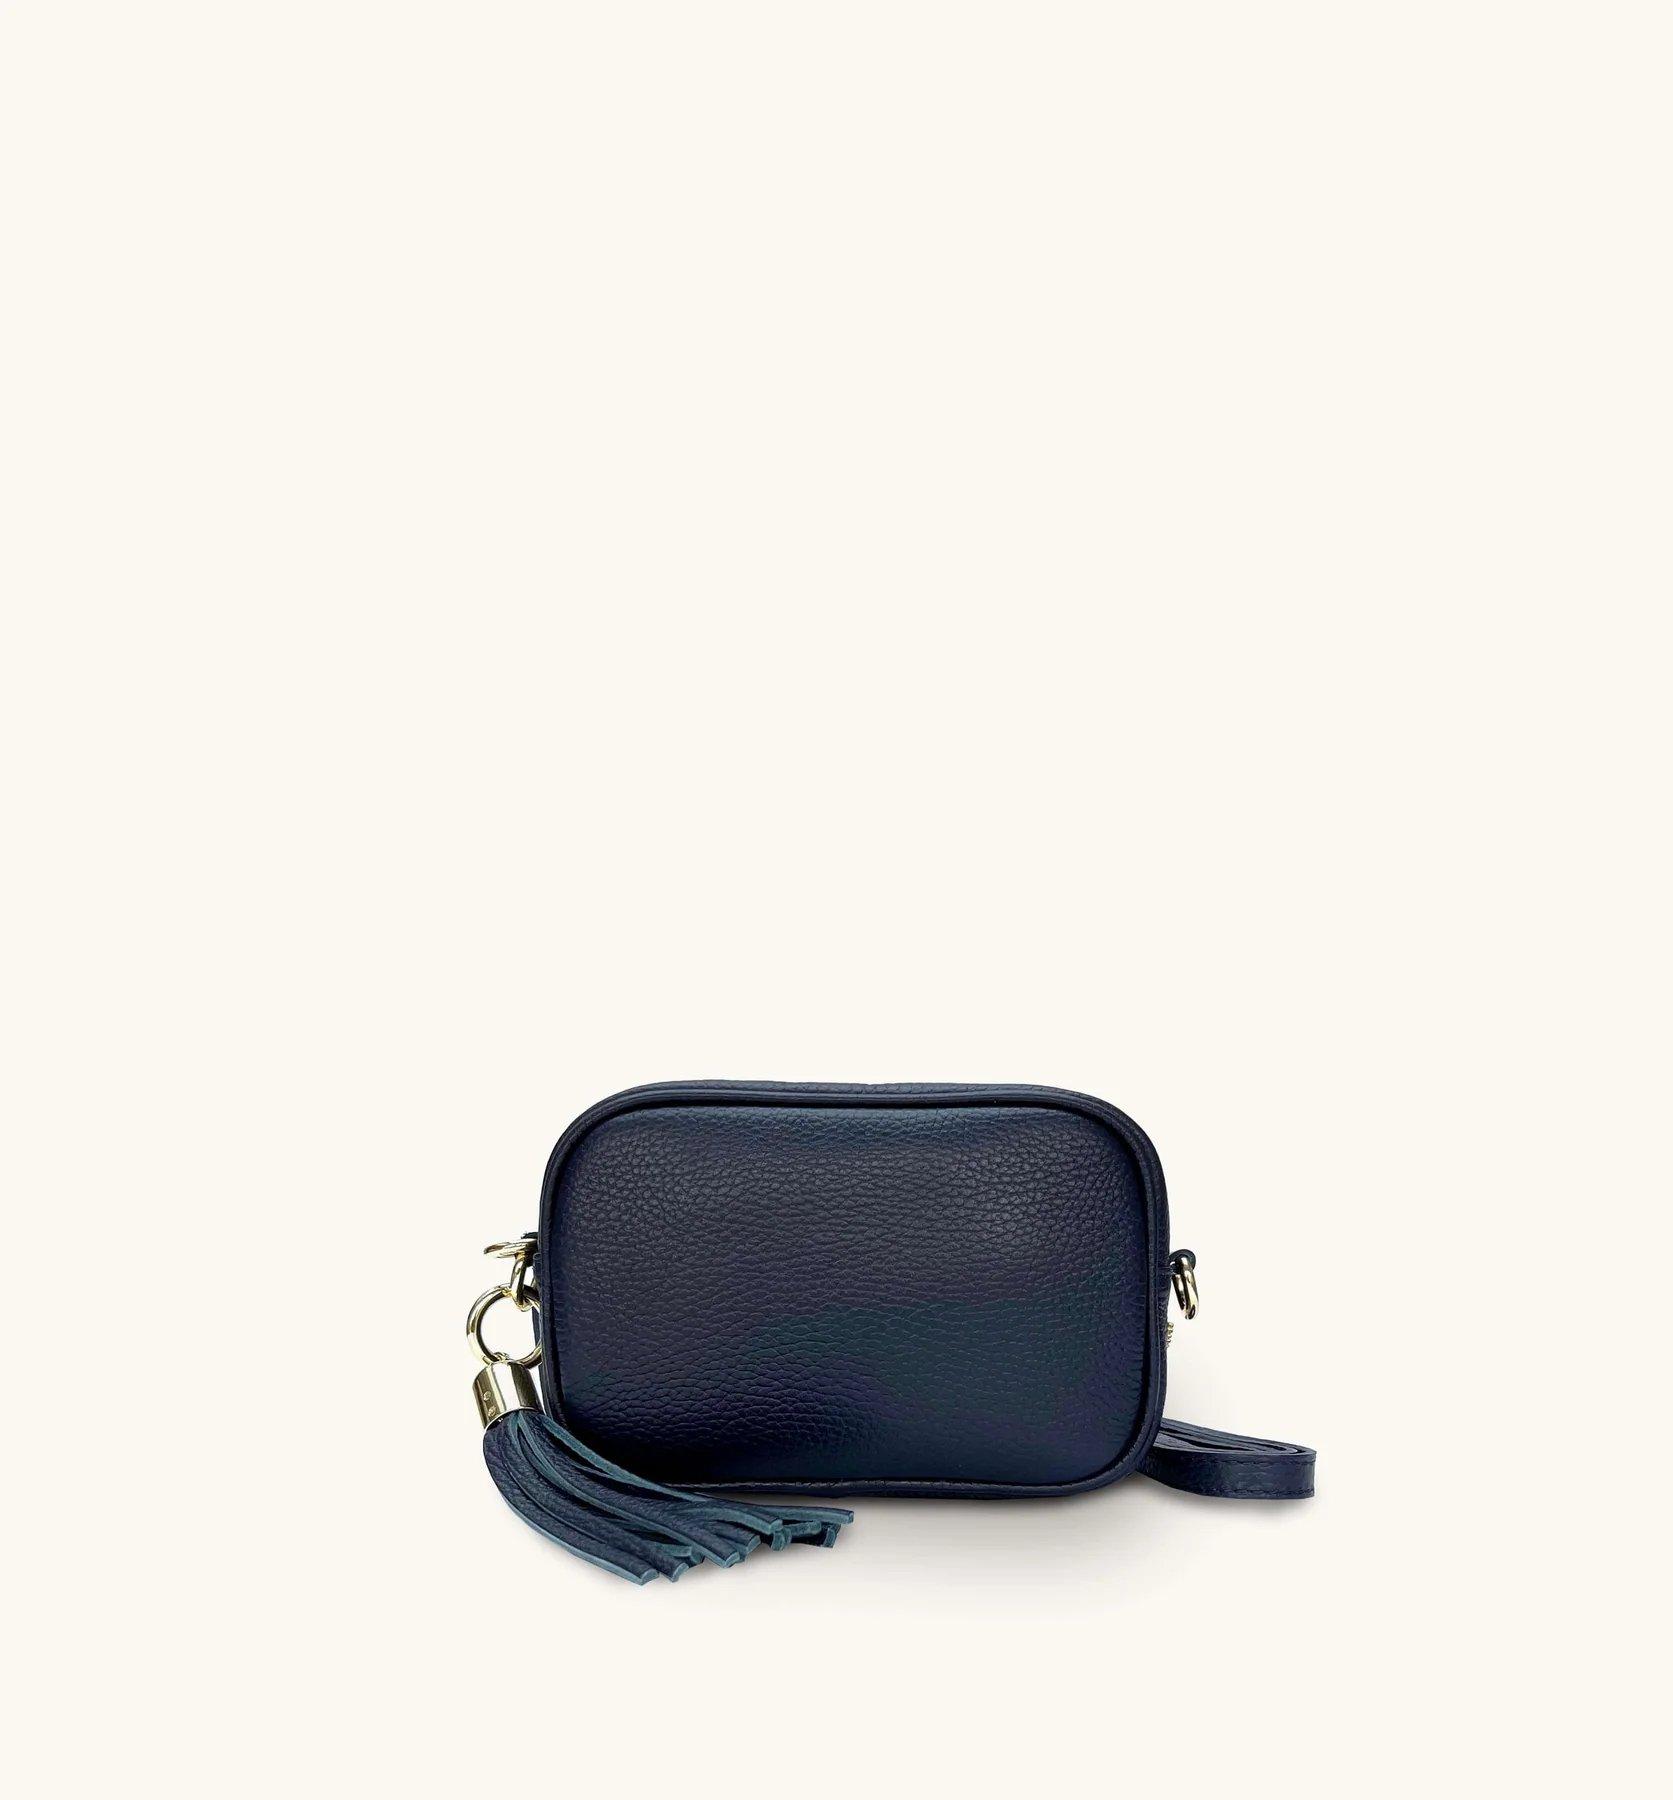 цена Темно-синяя кожаная сумка для телефона Mini с кисточками Apatchy London, темно-синий